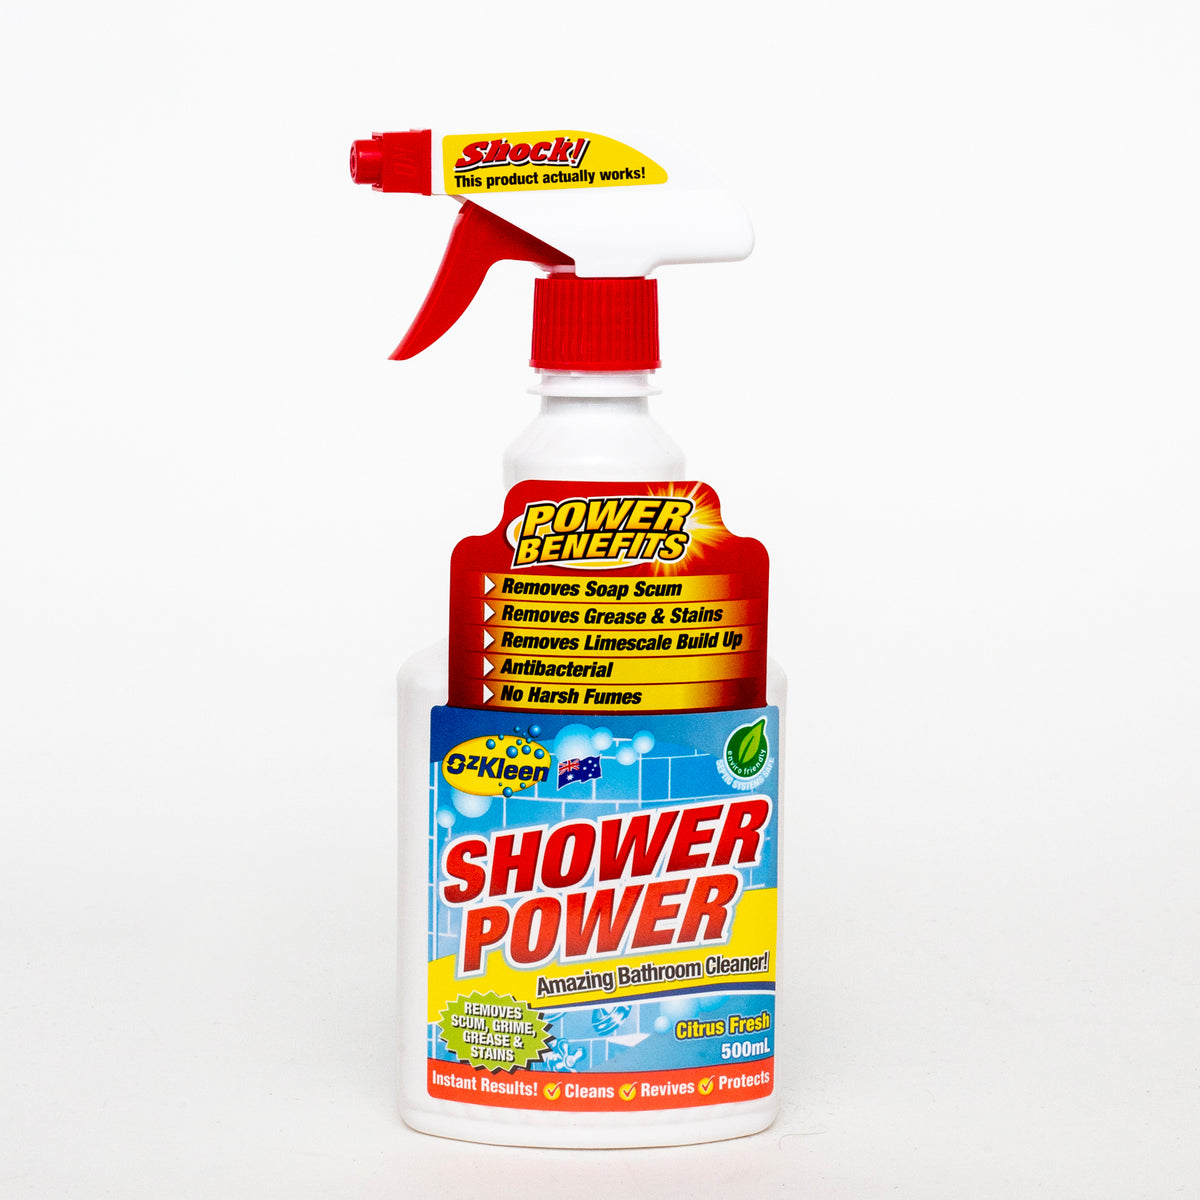 Shower Power - Amazing Bathroom cleaner